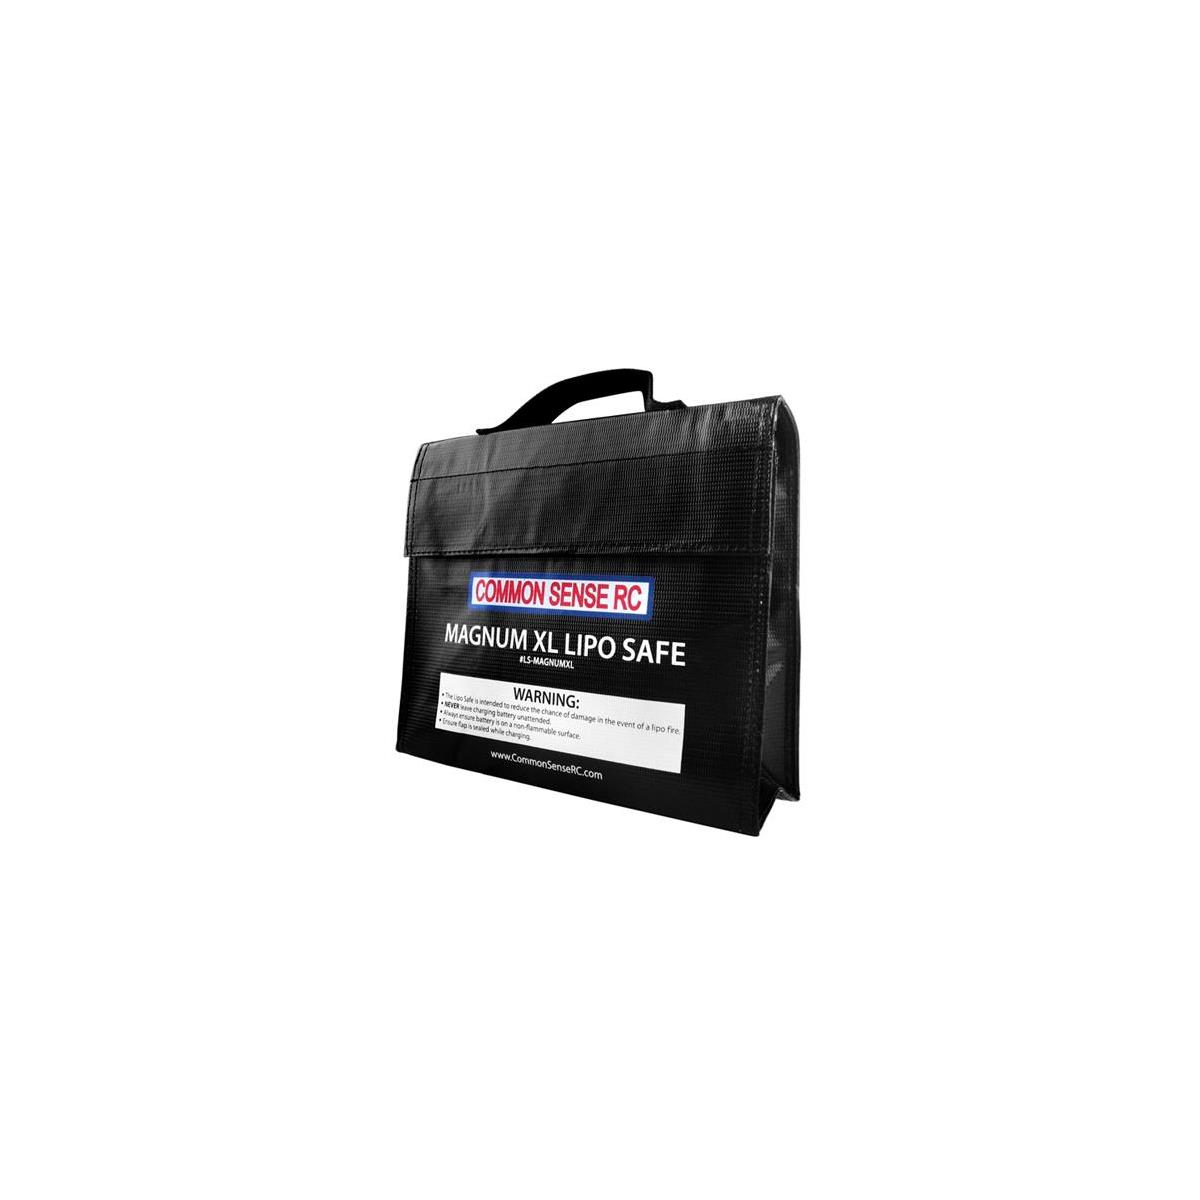 Image of COMMON SENSE RC Magnum XL Lipo Safe Charging/Storage Bag for Multiple 3S Lipo